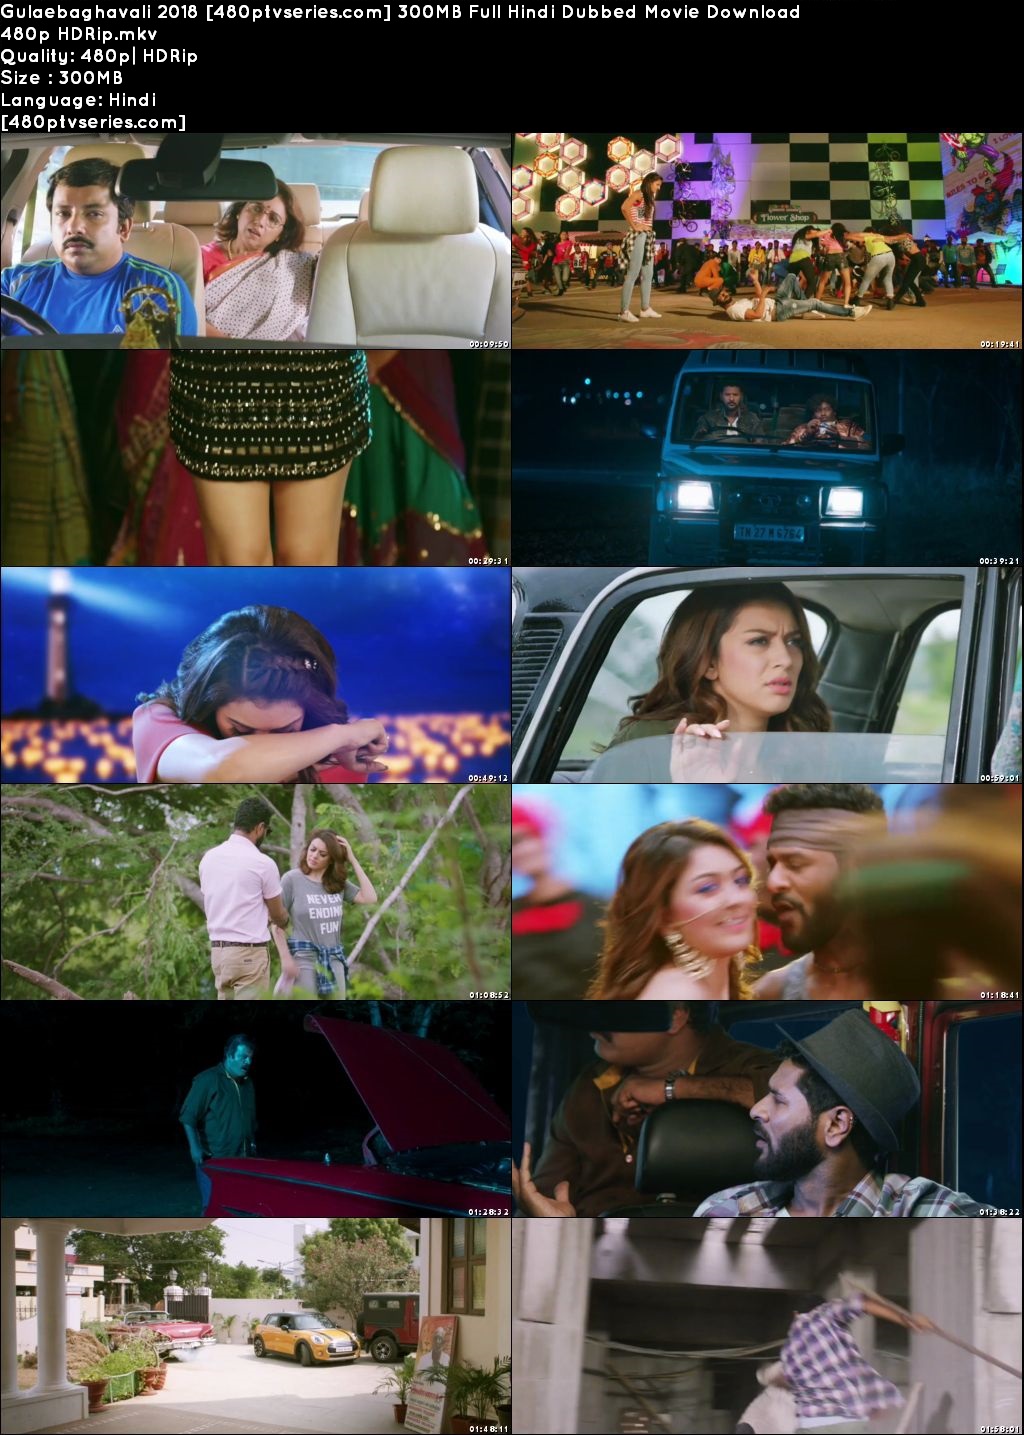 Gulaebaghavali 2018 300MB Full Hindi Dubbed Movie Download 480p HDRip